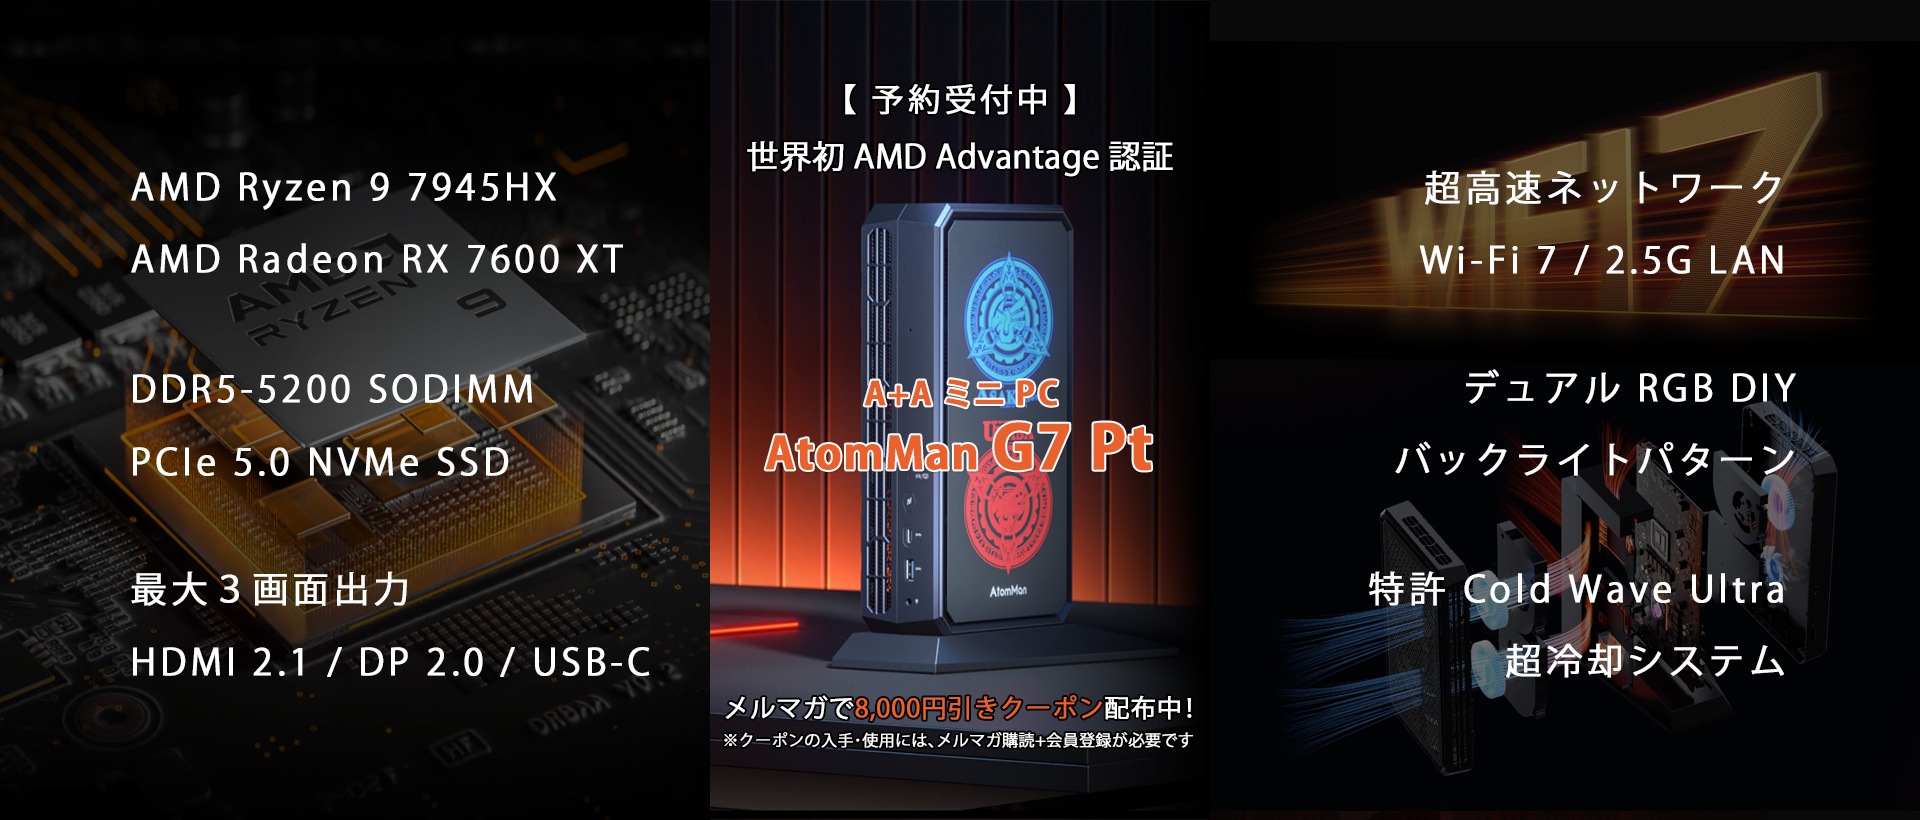 世界初 AMD Advantage 認証 A+A ミニPC「AtomMan G7 Pt」